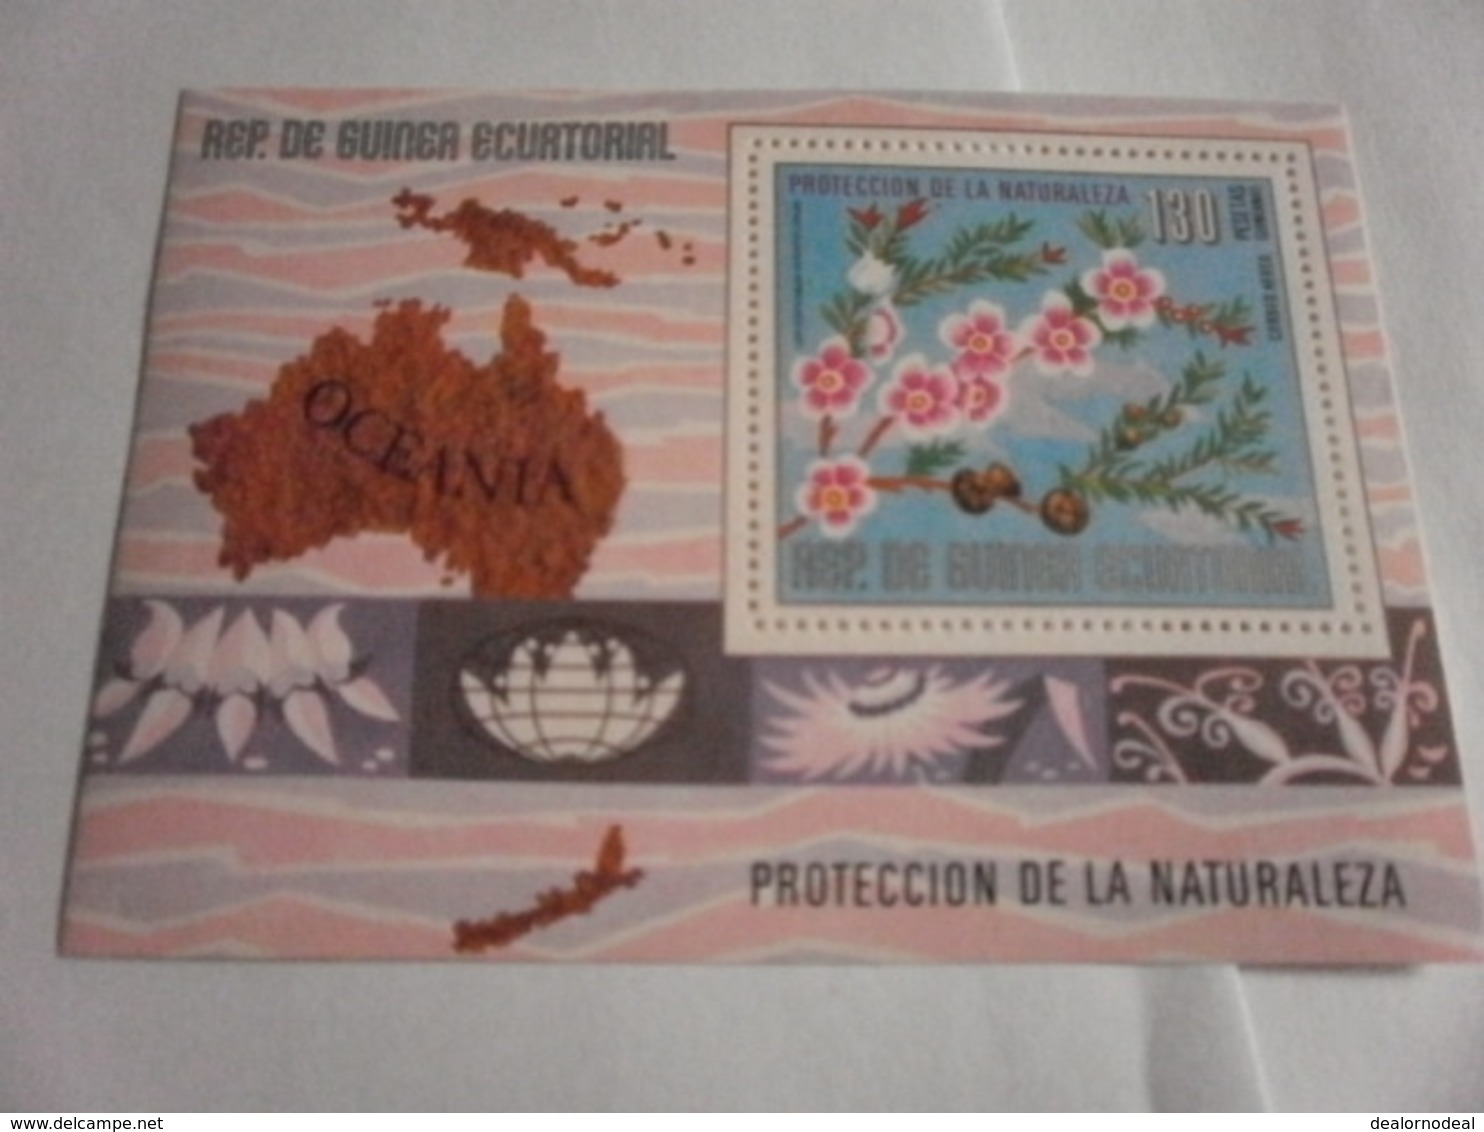 Miniature Sheet Perf Oceania Nature Protection - Equatorial Guinea